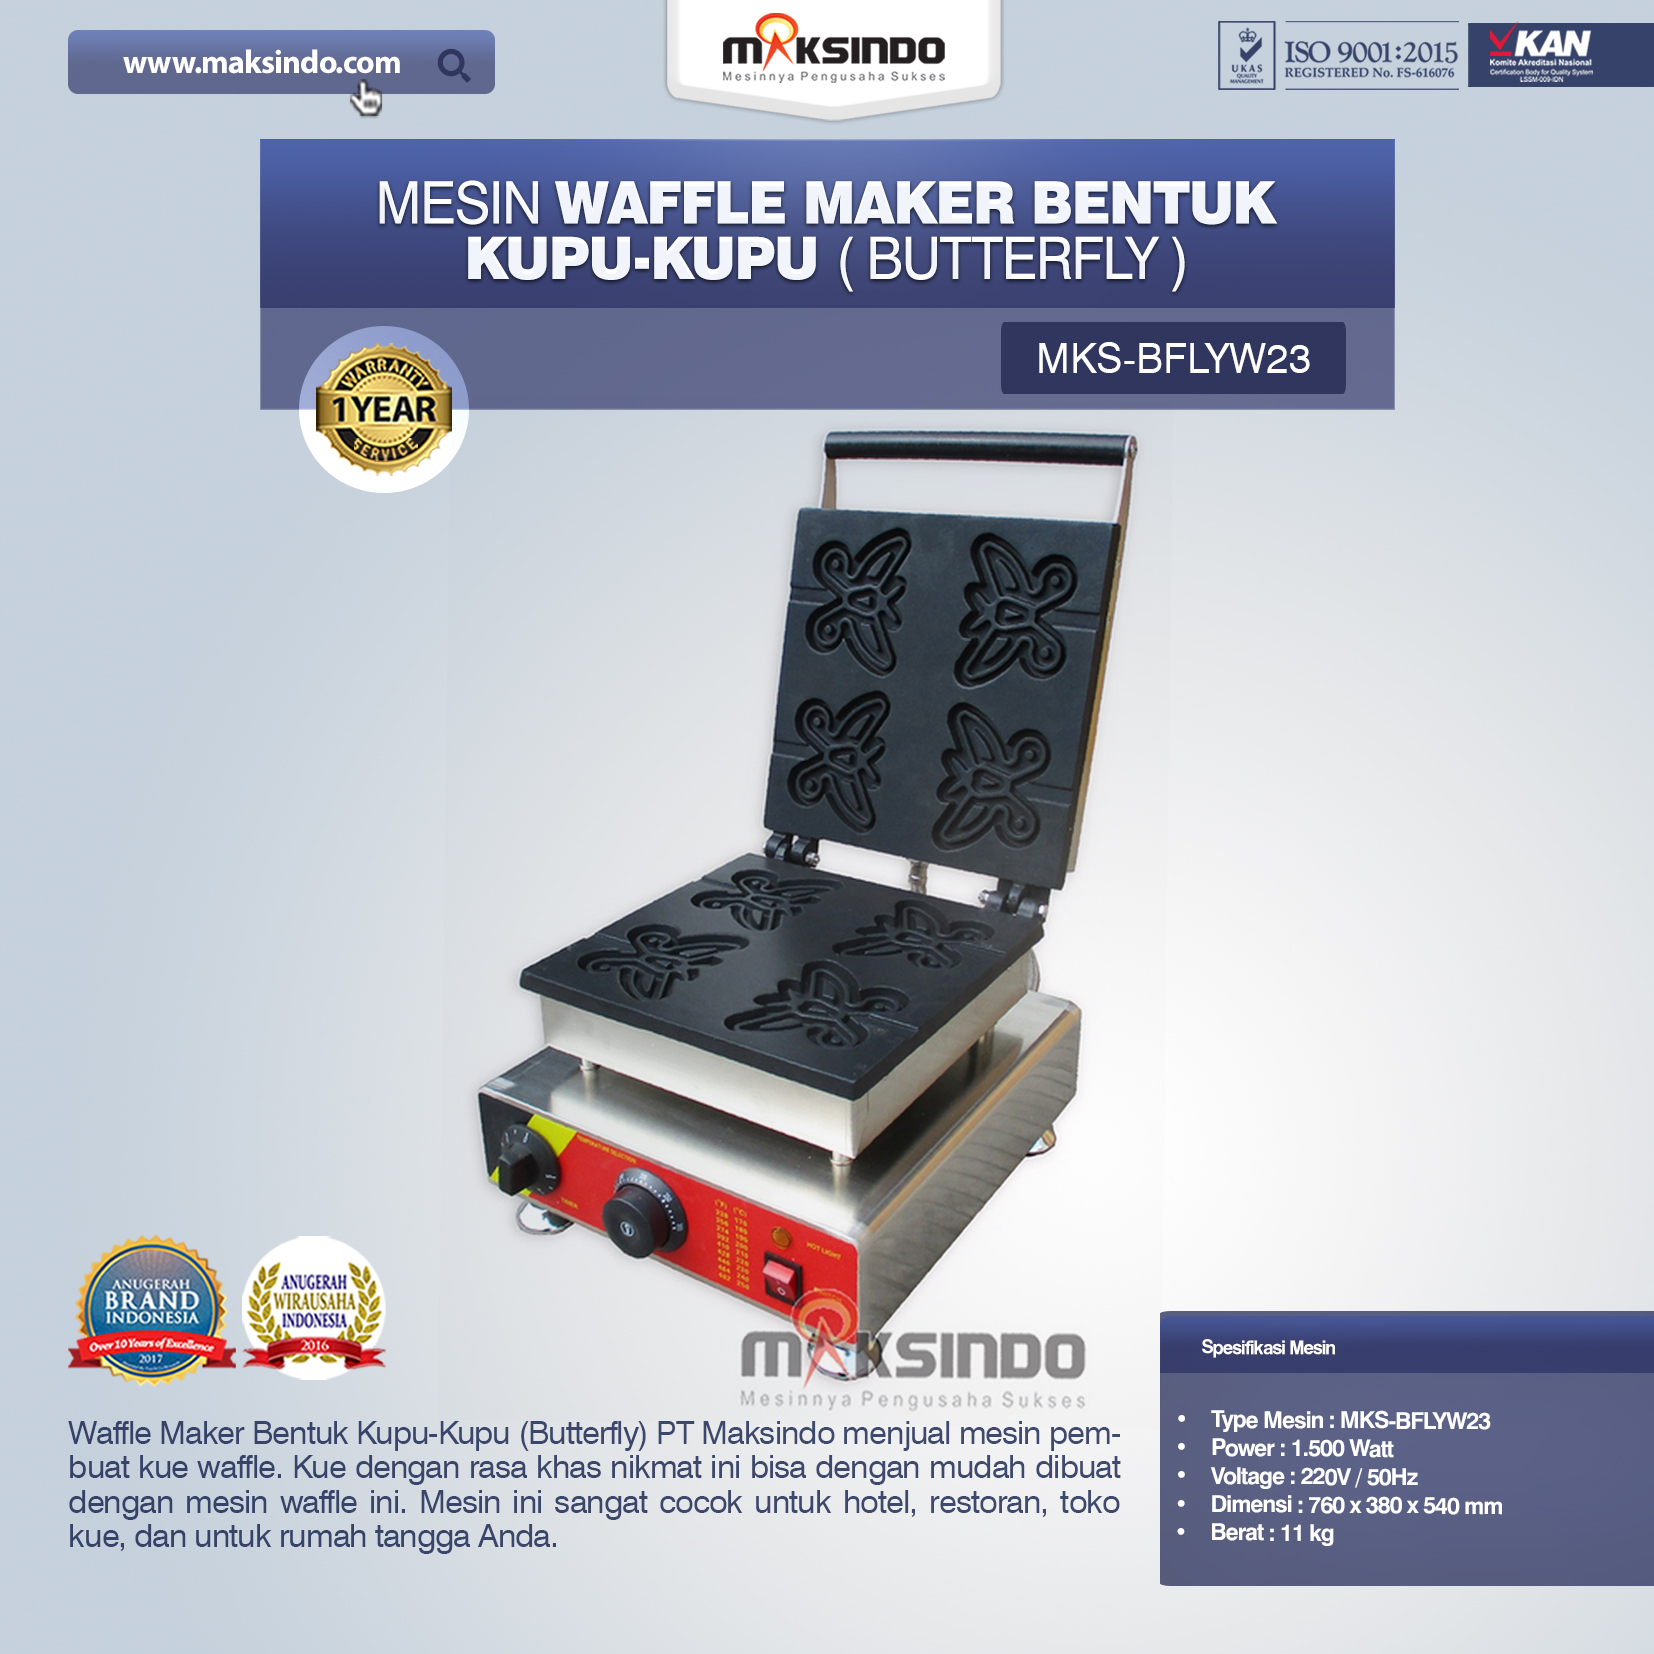 Mesin Waffle Maker Bentuk Kupu-Kupu (Butterfly) MKS-BFLYW23